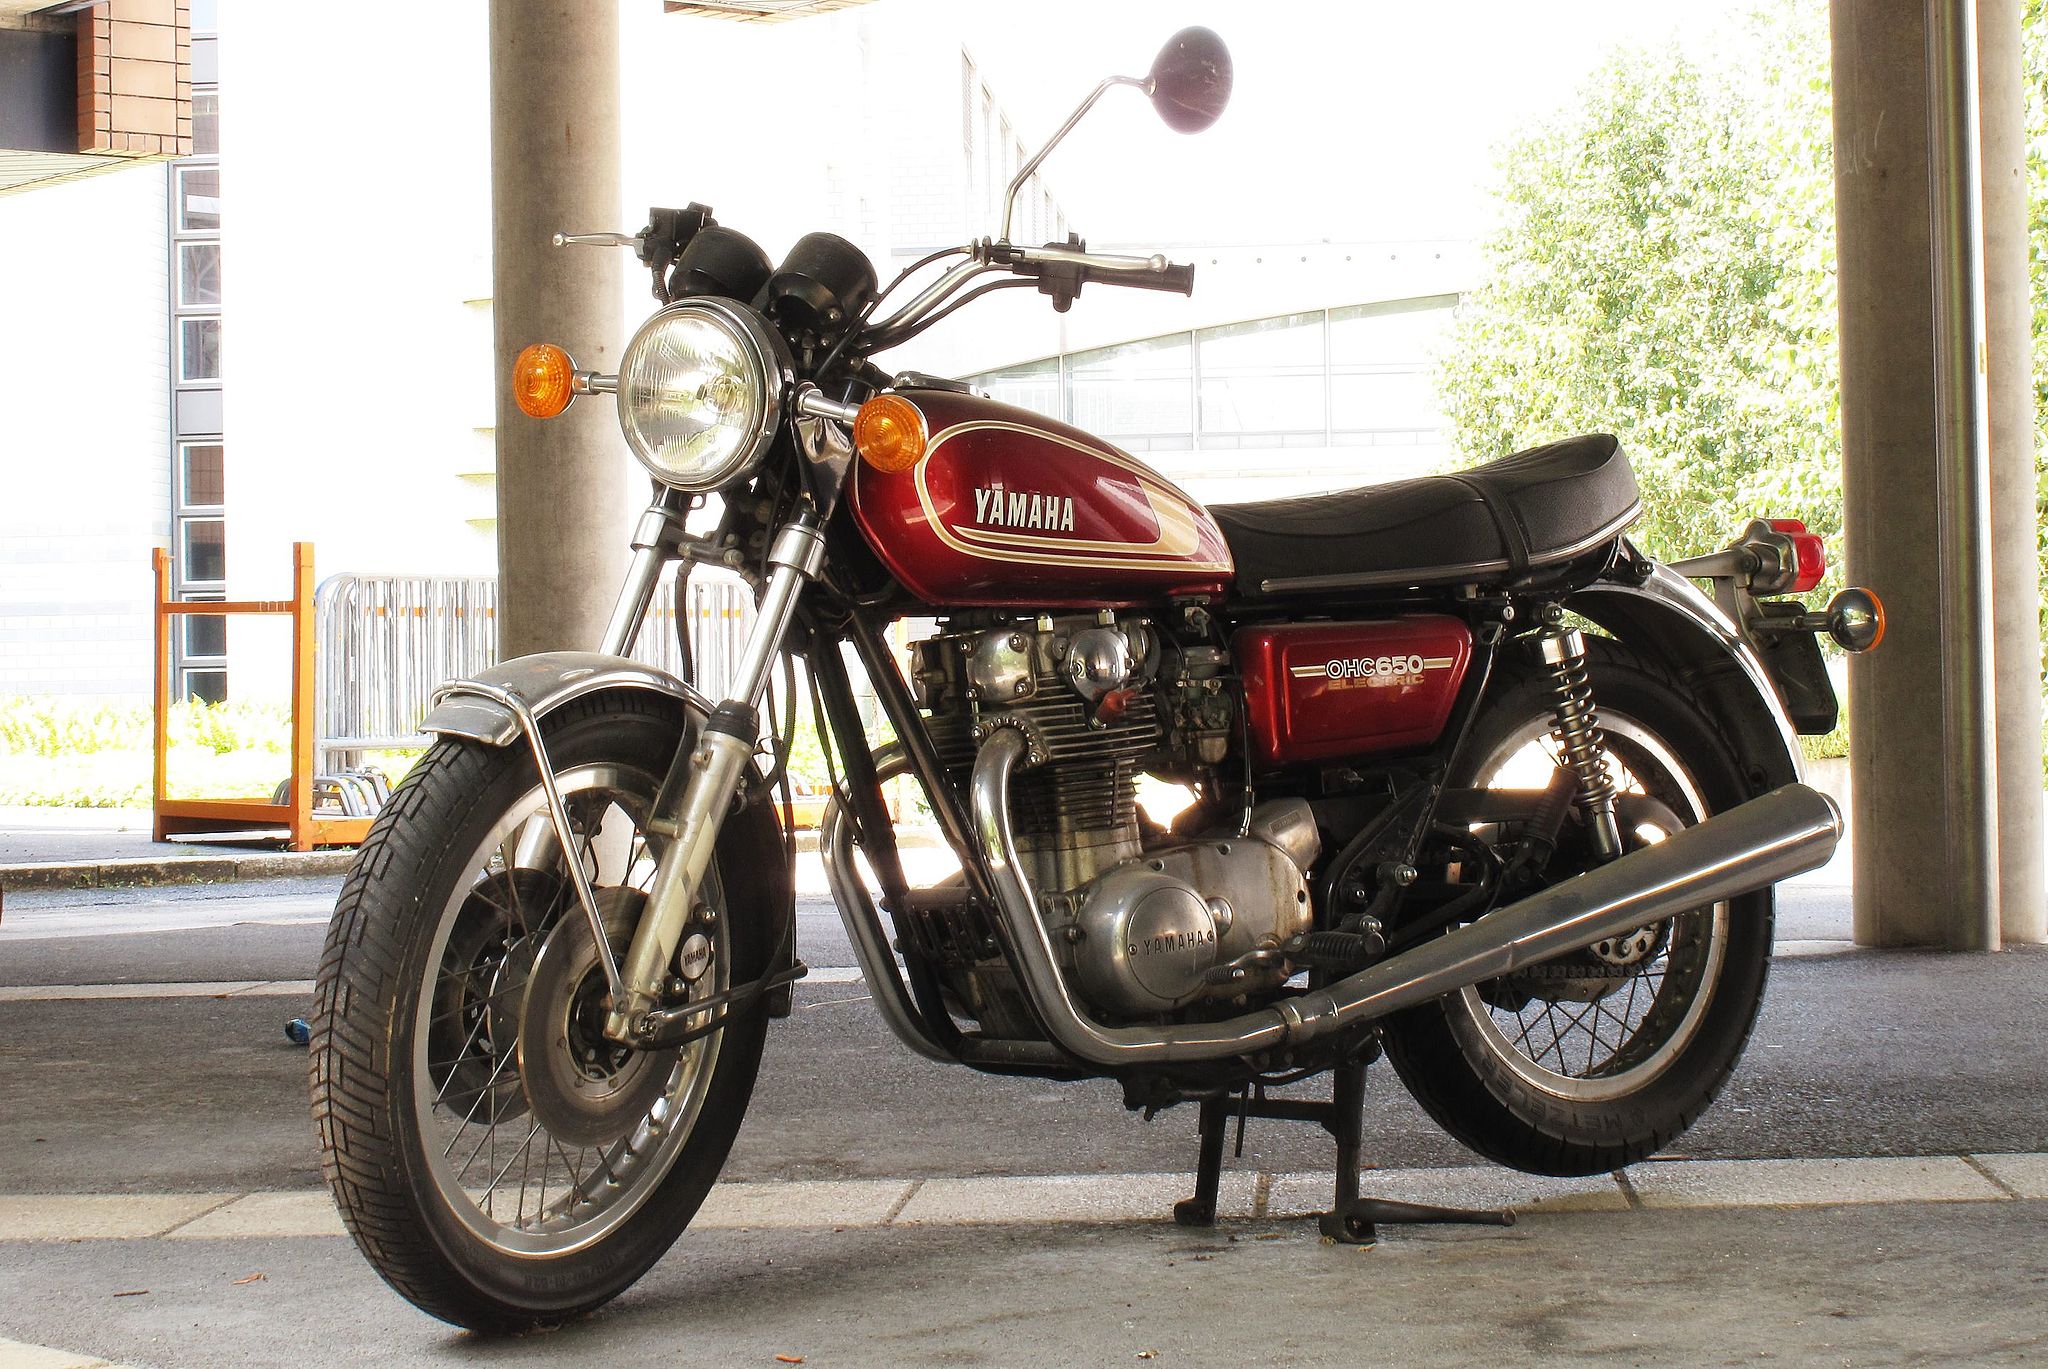 Yamaha XS 650 vintage motorcycle